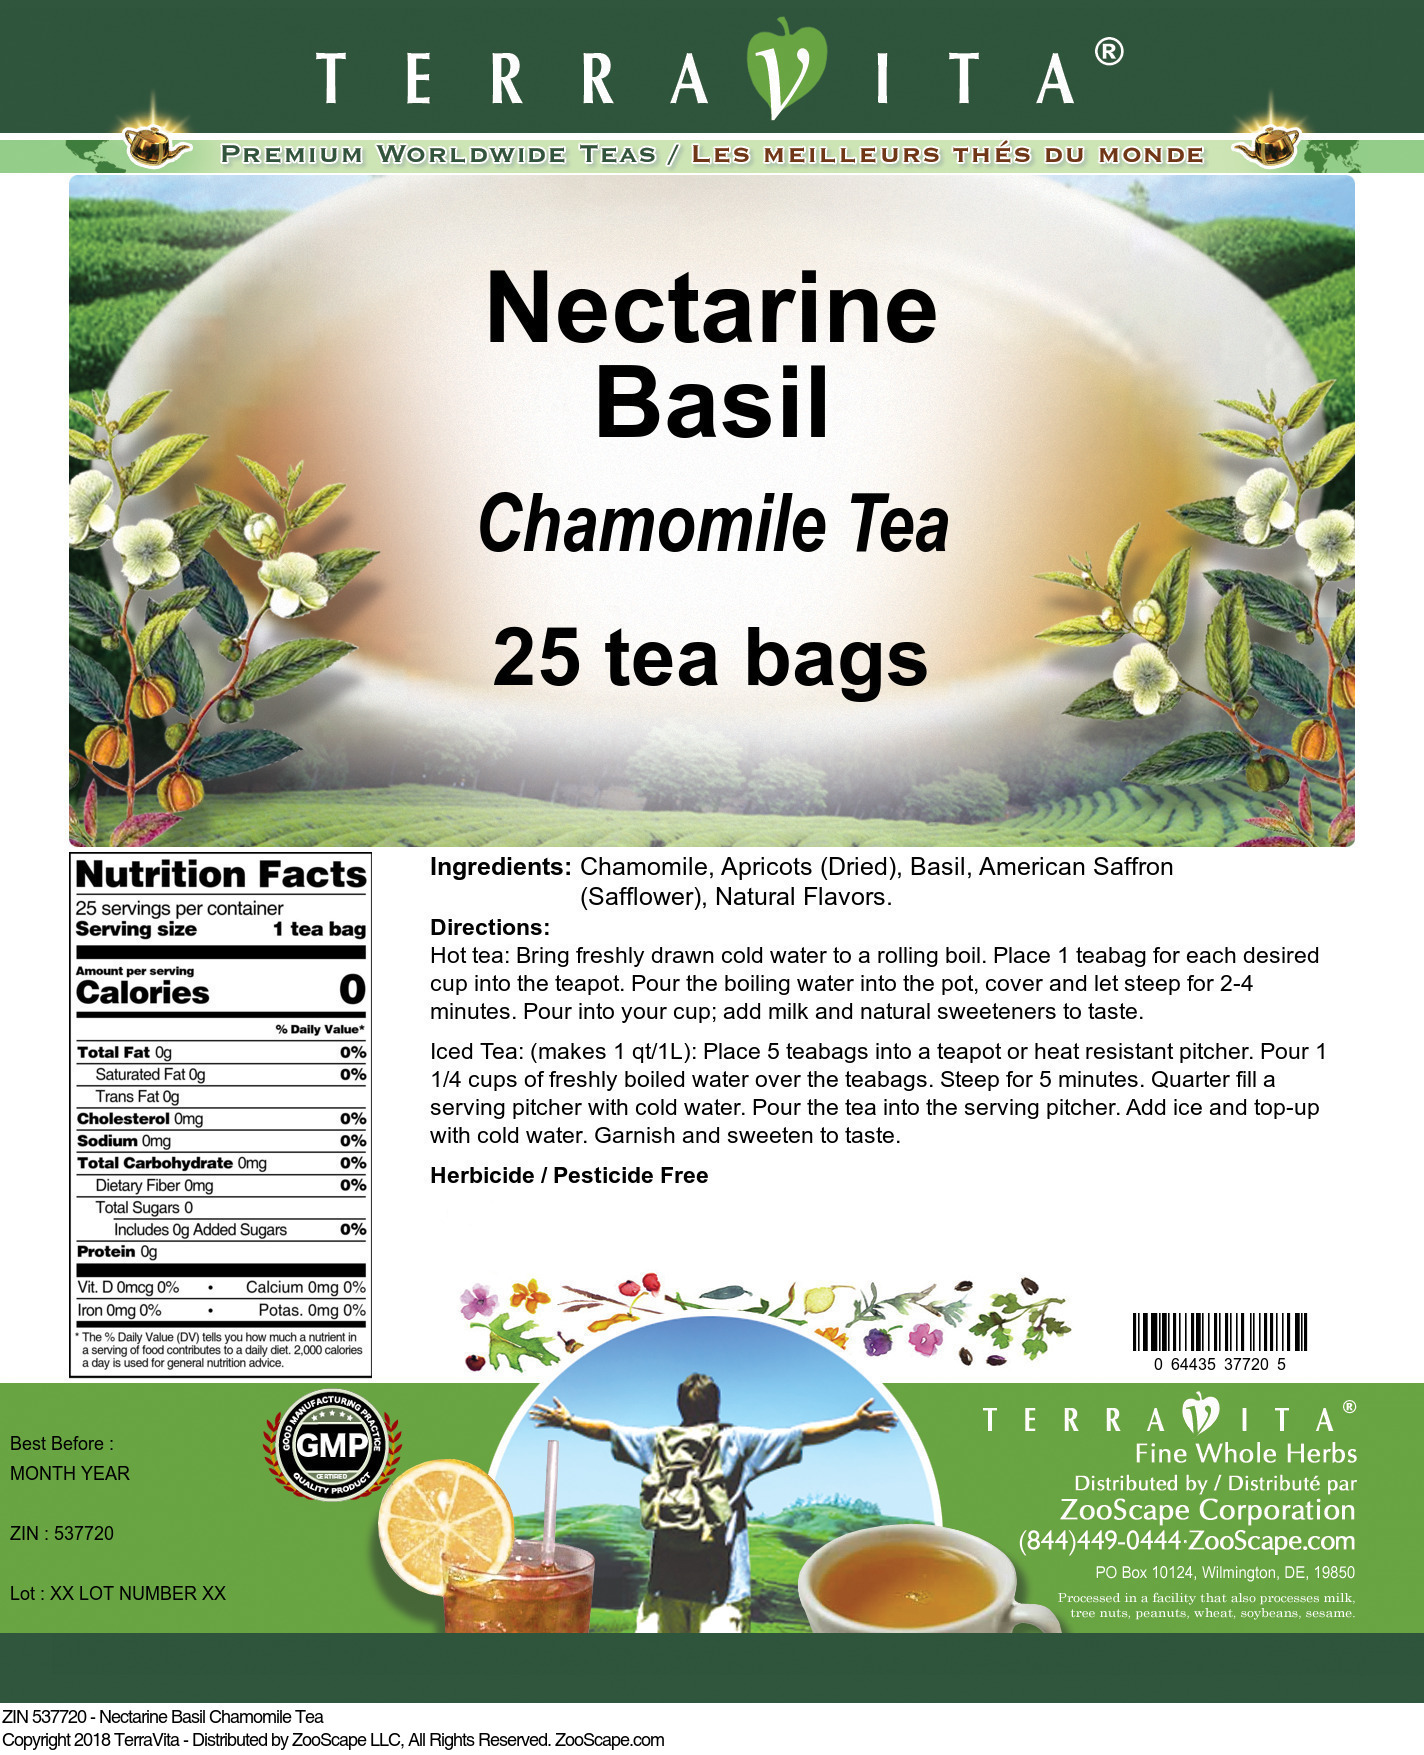 Nectarine Basil Chamomile Tea - Label